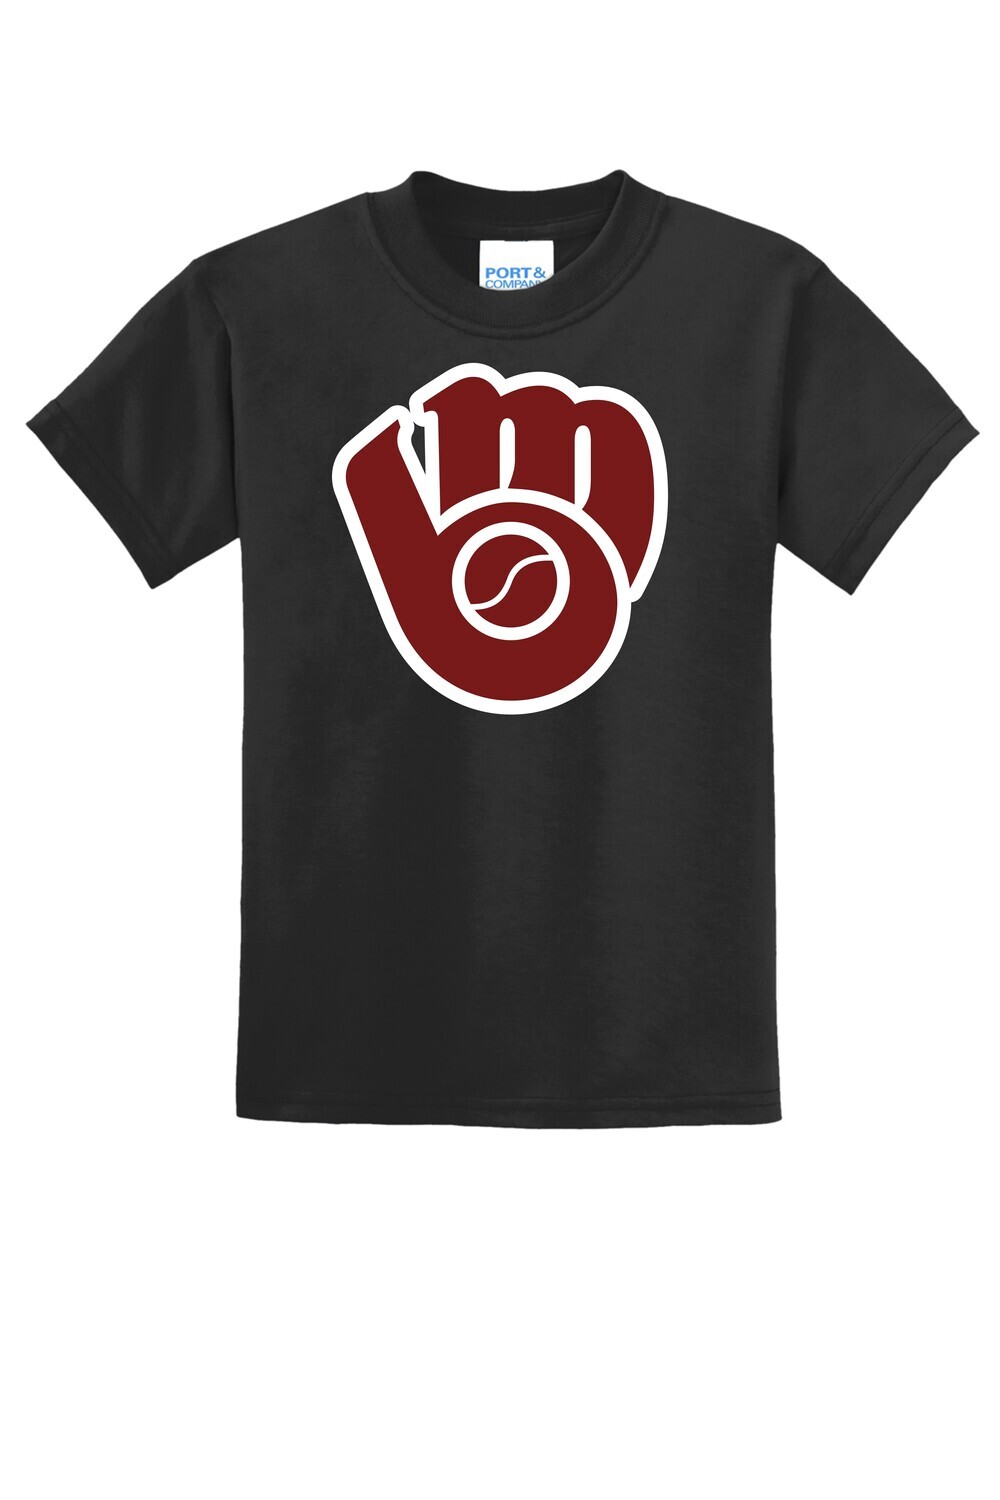 Moline Blackhawks Glove Logo 50/50 Blend Youth T-shirt